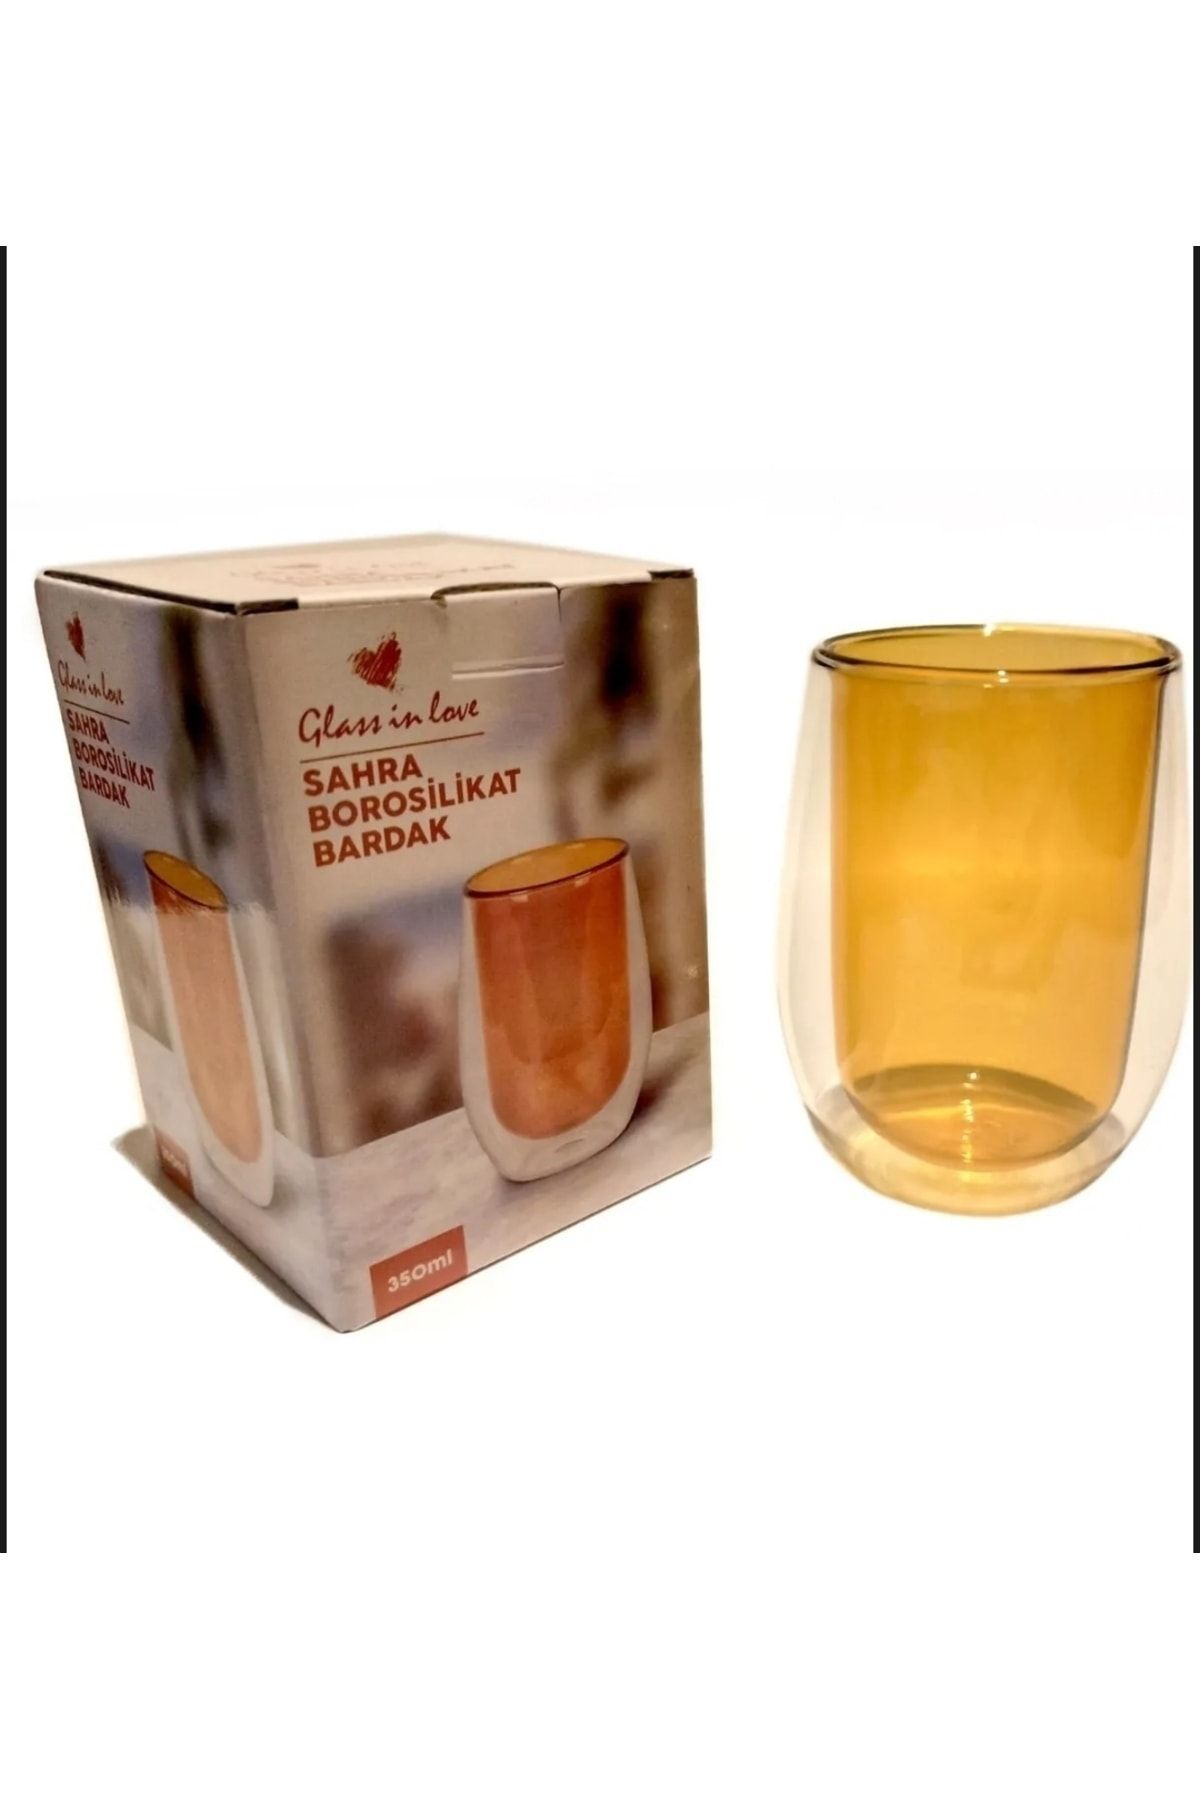 Glass In Love borosilikat bardak sahra model 350 ml